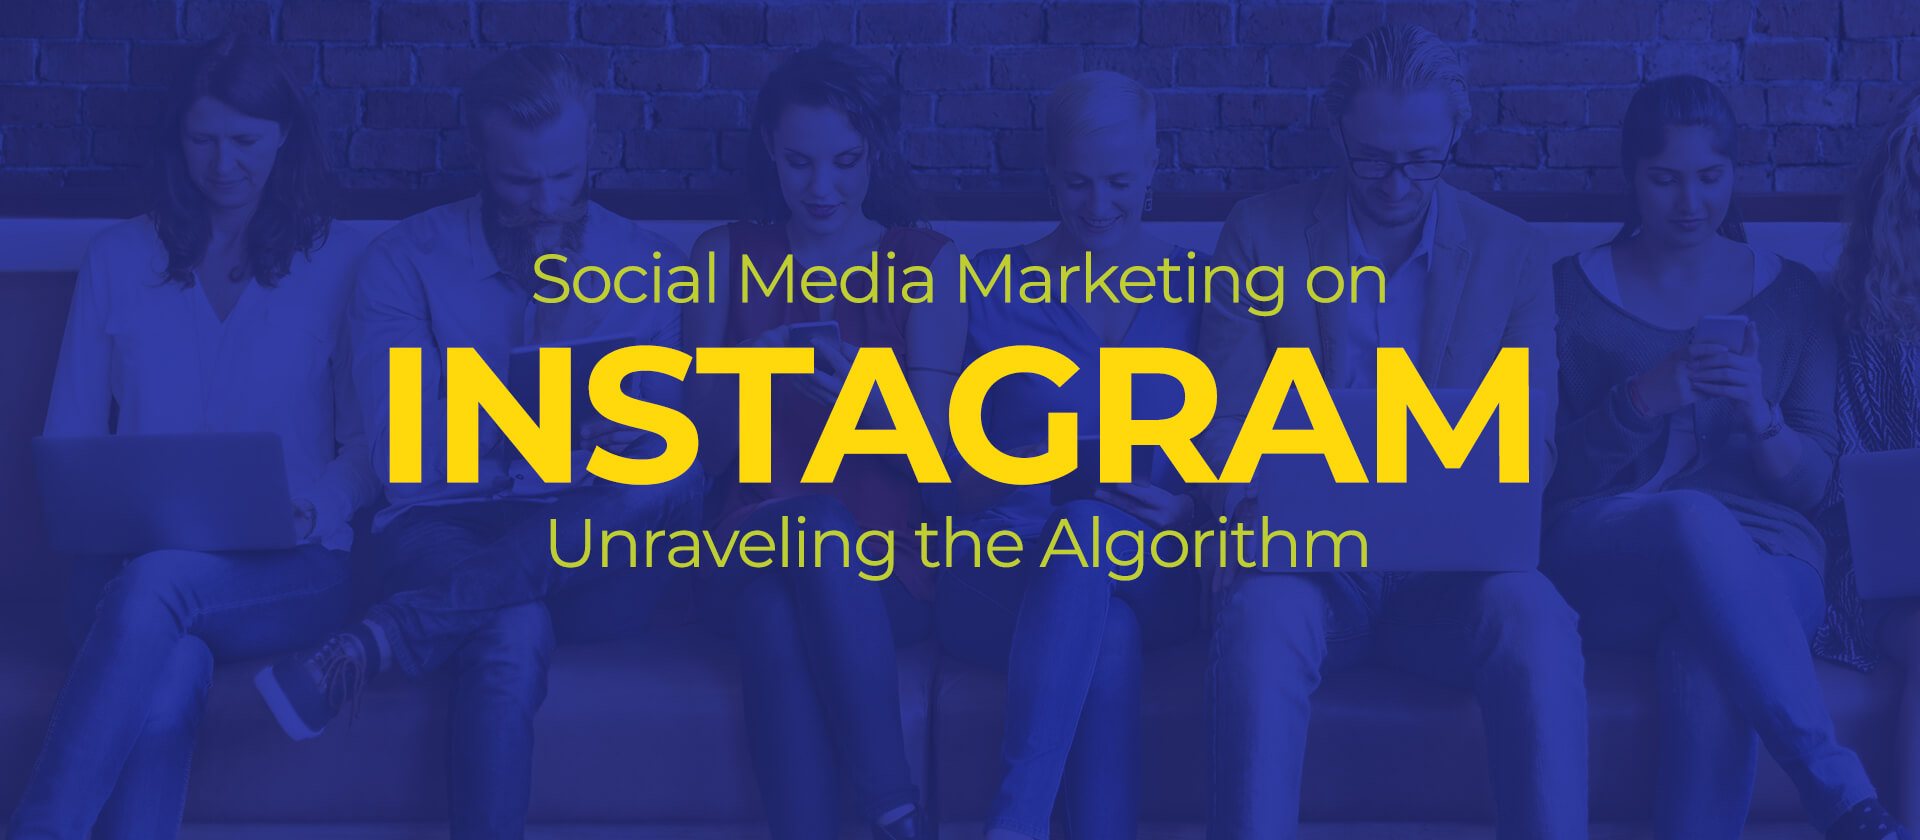 Social Media Marketing on Instagram: Unraveling the Algorithm